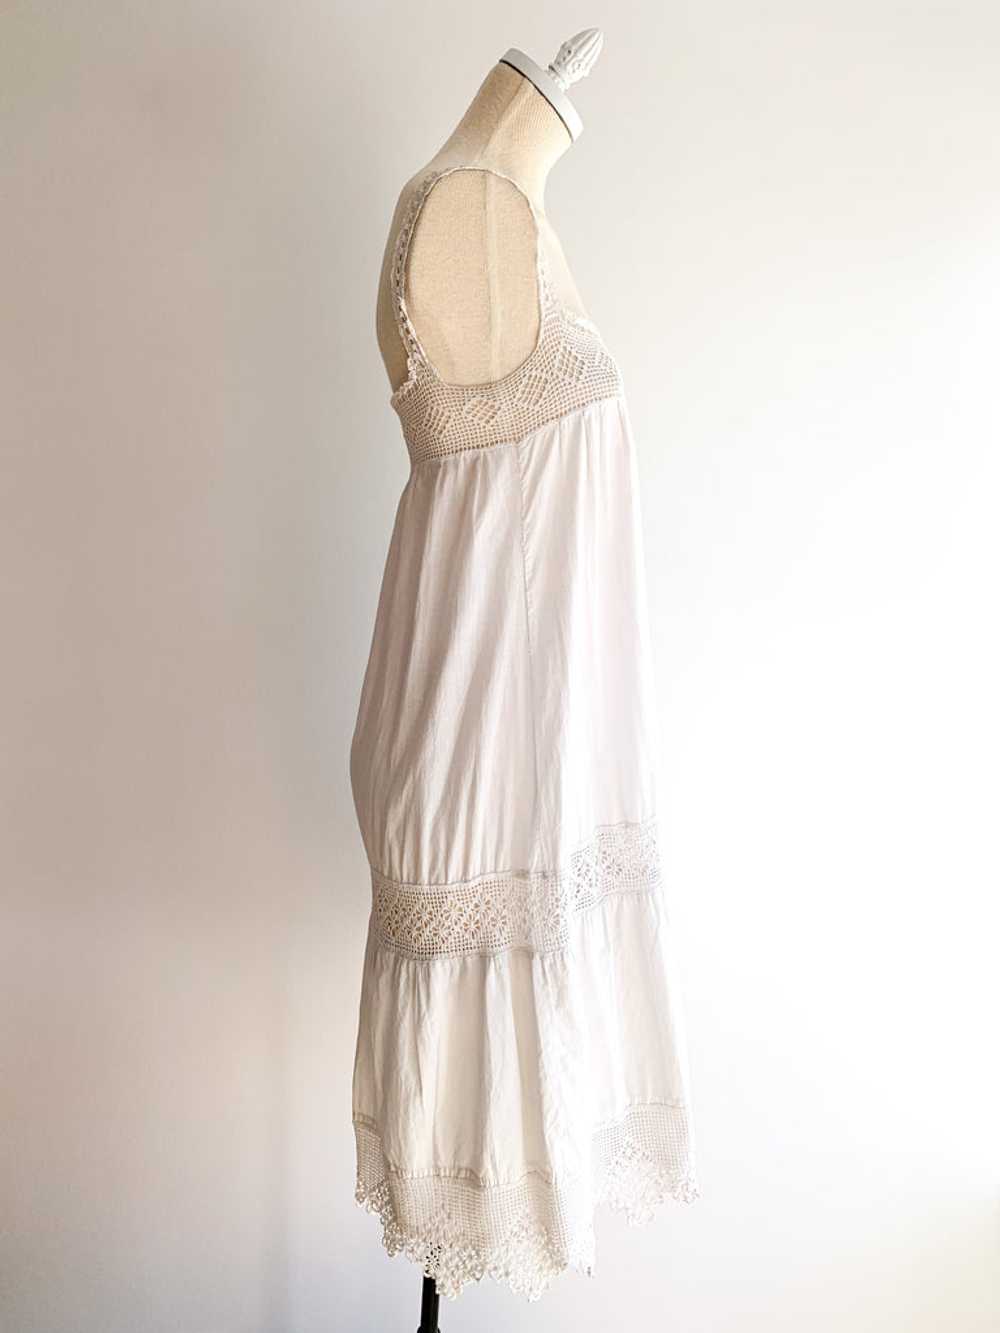 Antique Cotton & Crochet Summer Dress - image 7